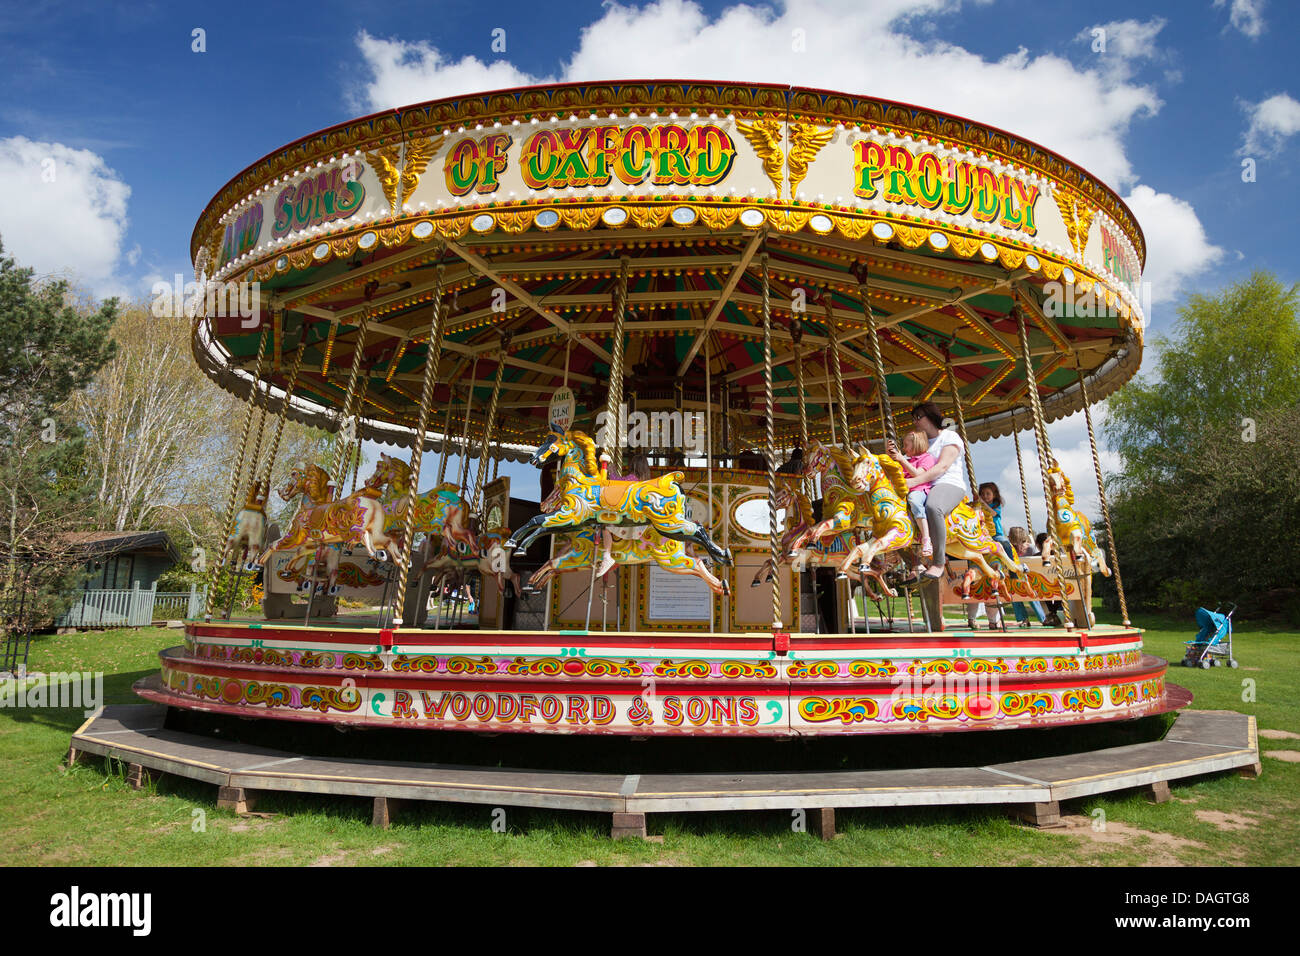 Merry-go-round at Millets Farm, Oxfordshire 2 Stock Photo - Alamy